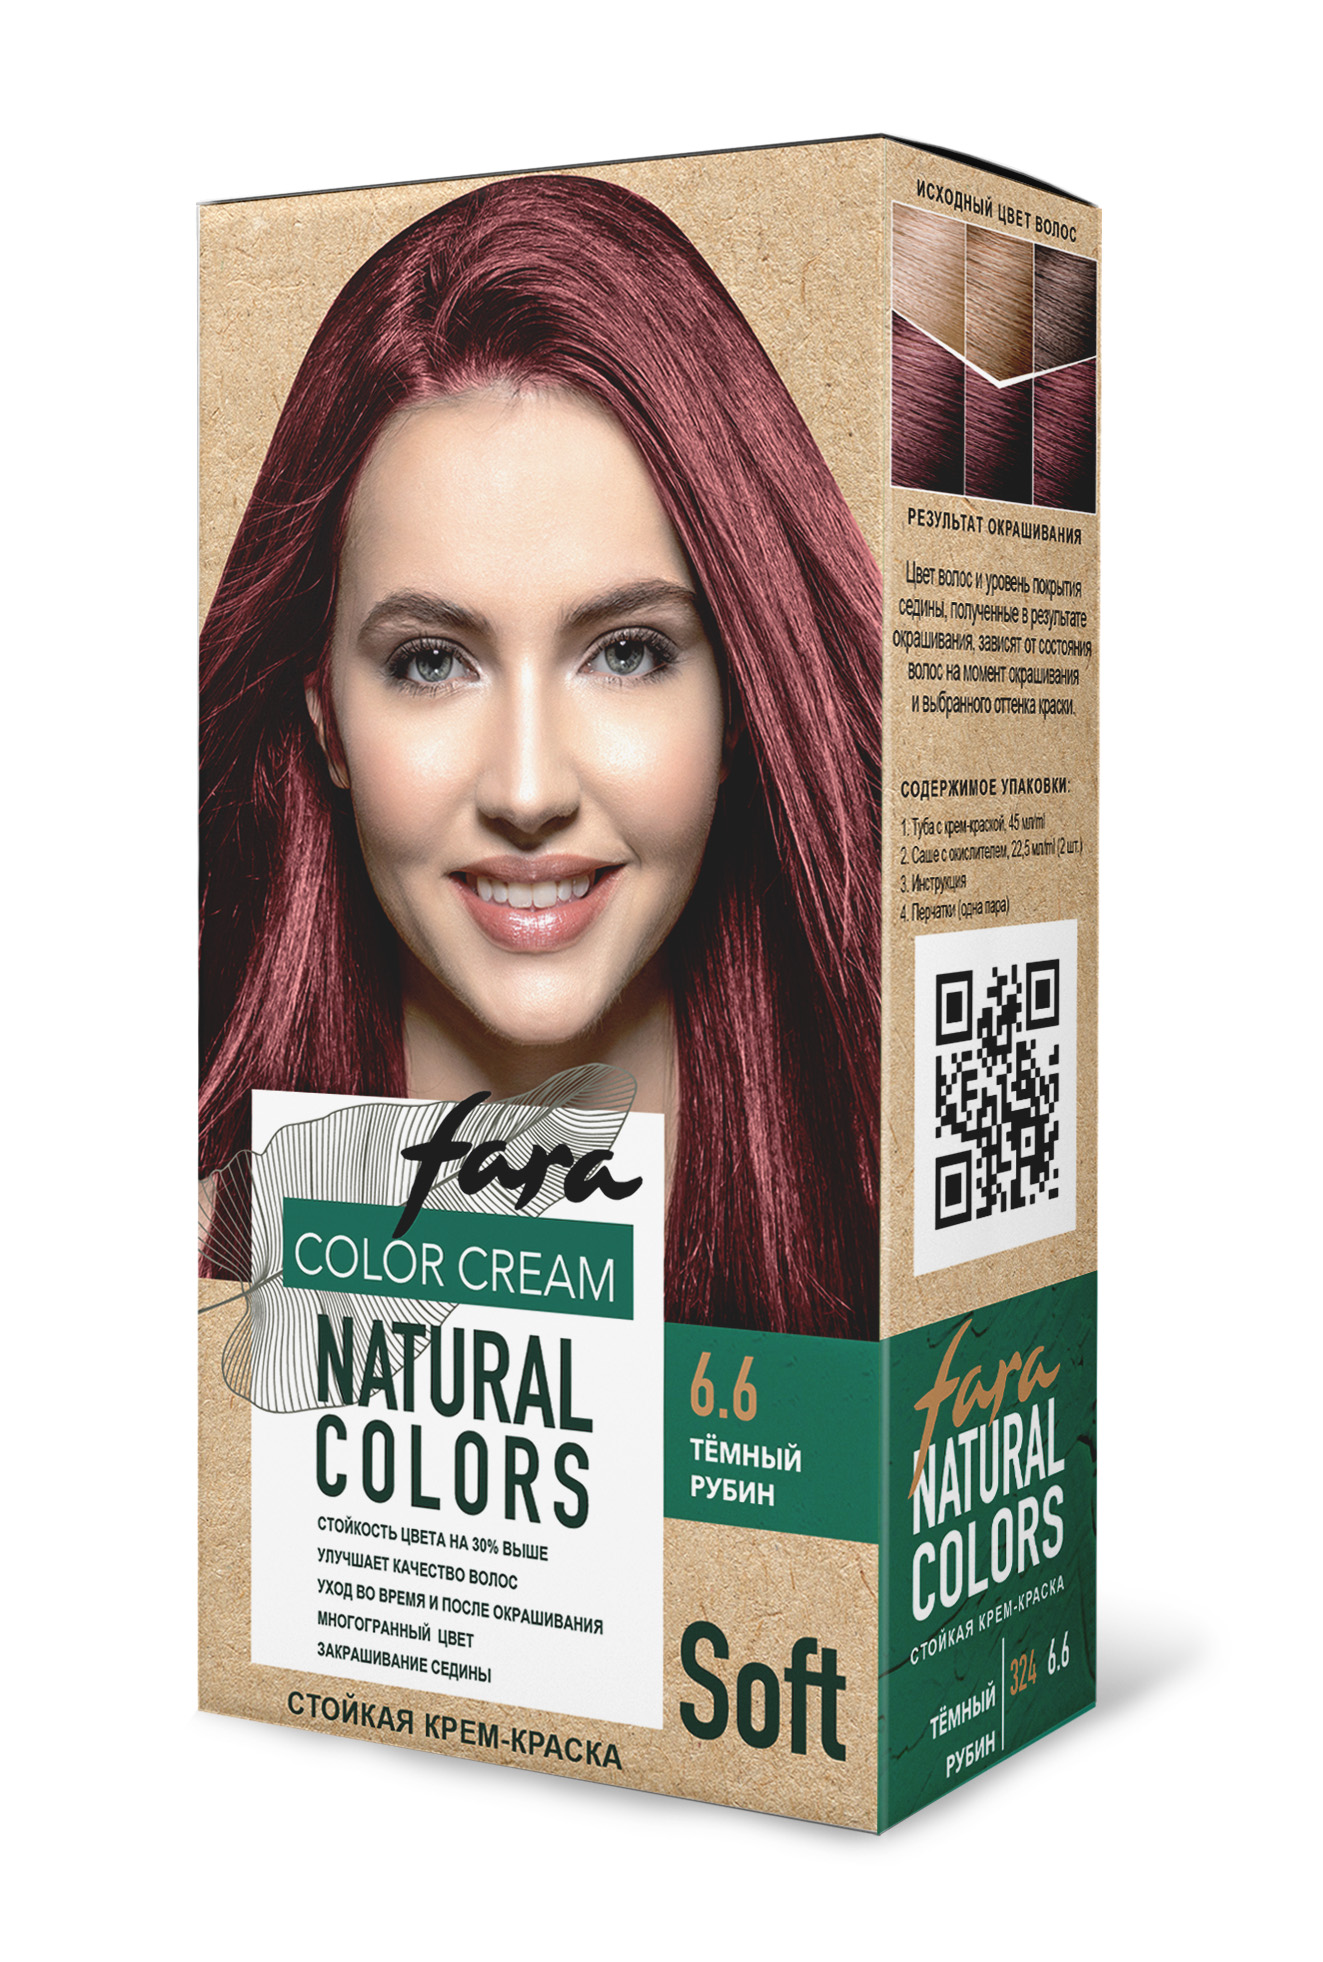 Краска для волос FARA Natural Colors Soft 324 темный рубин - фото 7